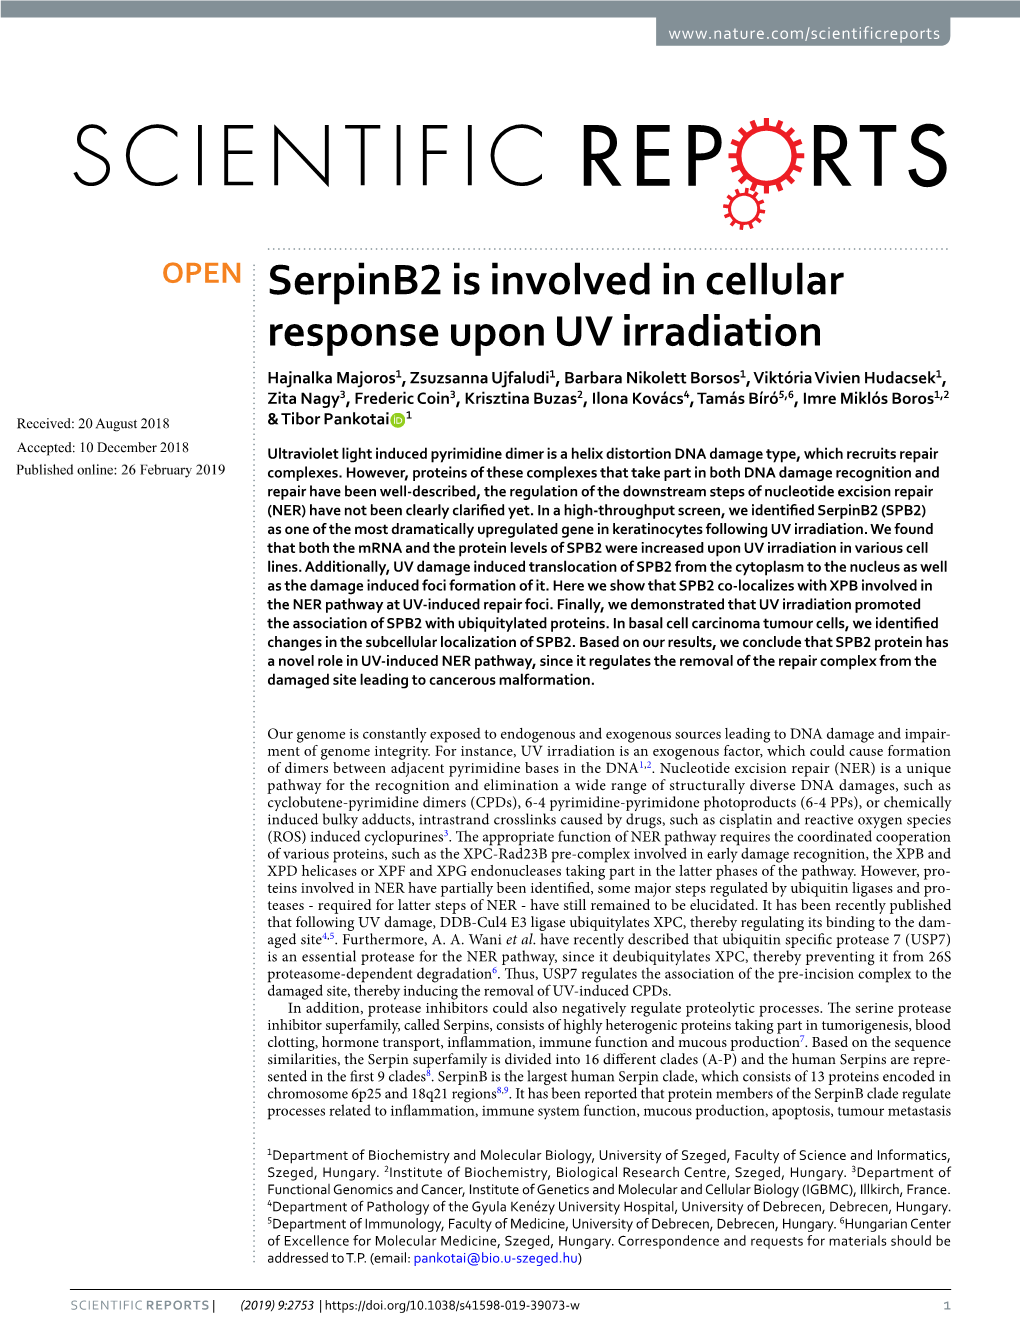 Serpinb2 Is Involved in Cellular Response Upon UV Irradiation